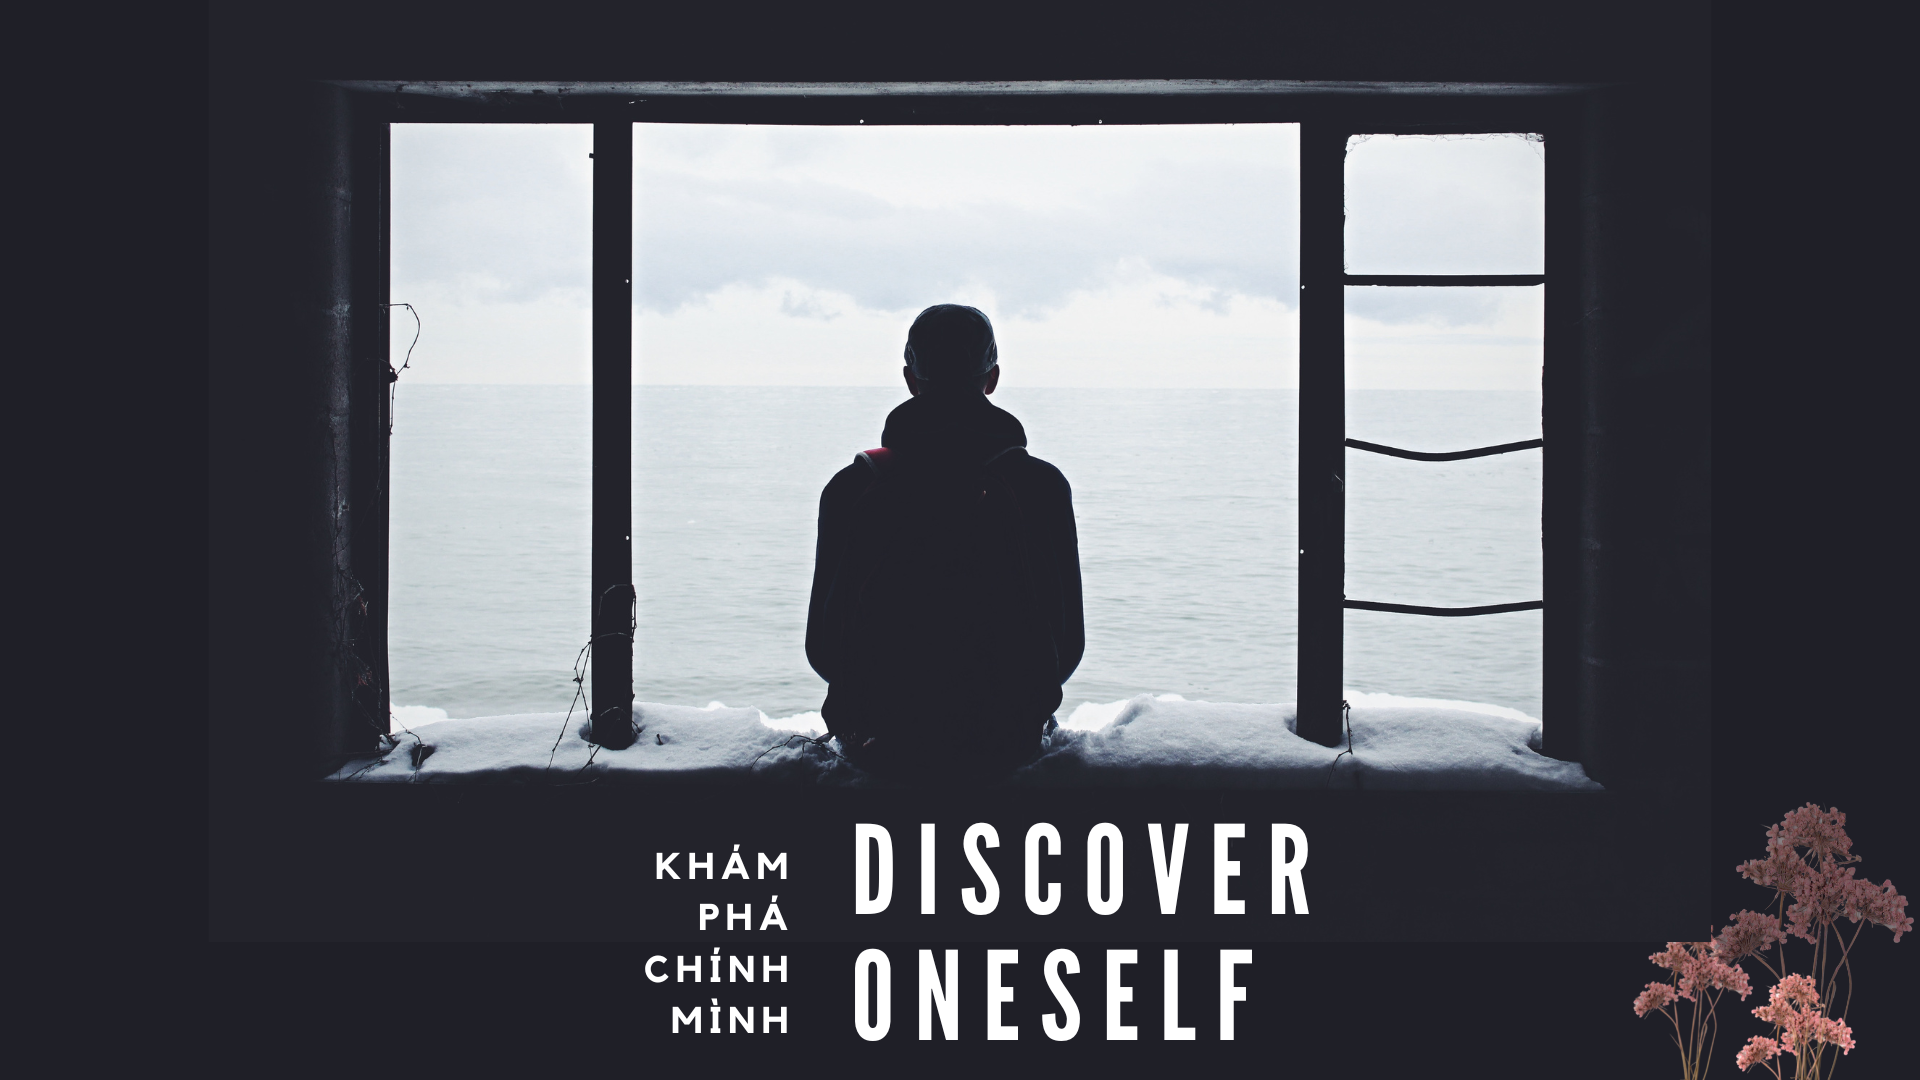 kham pha chinh minh   discover oneself